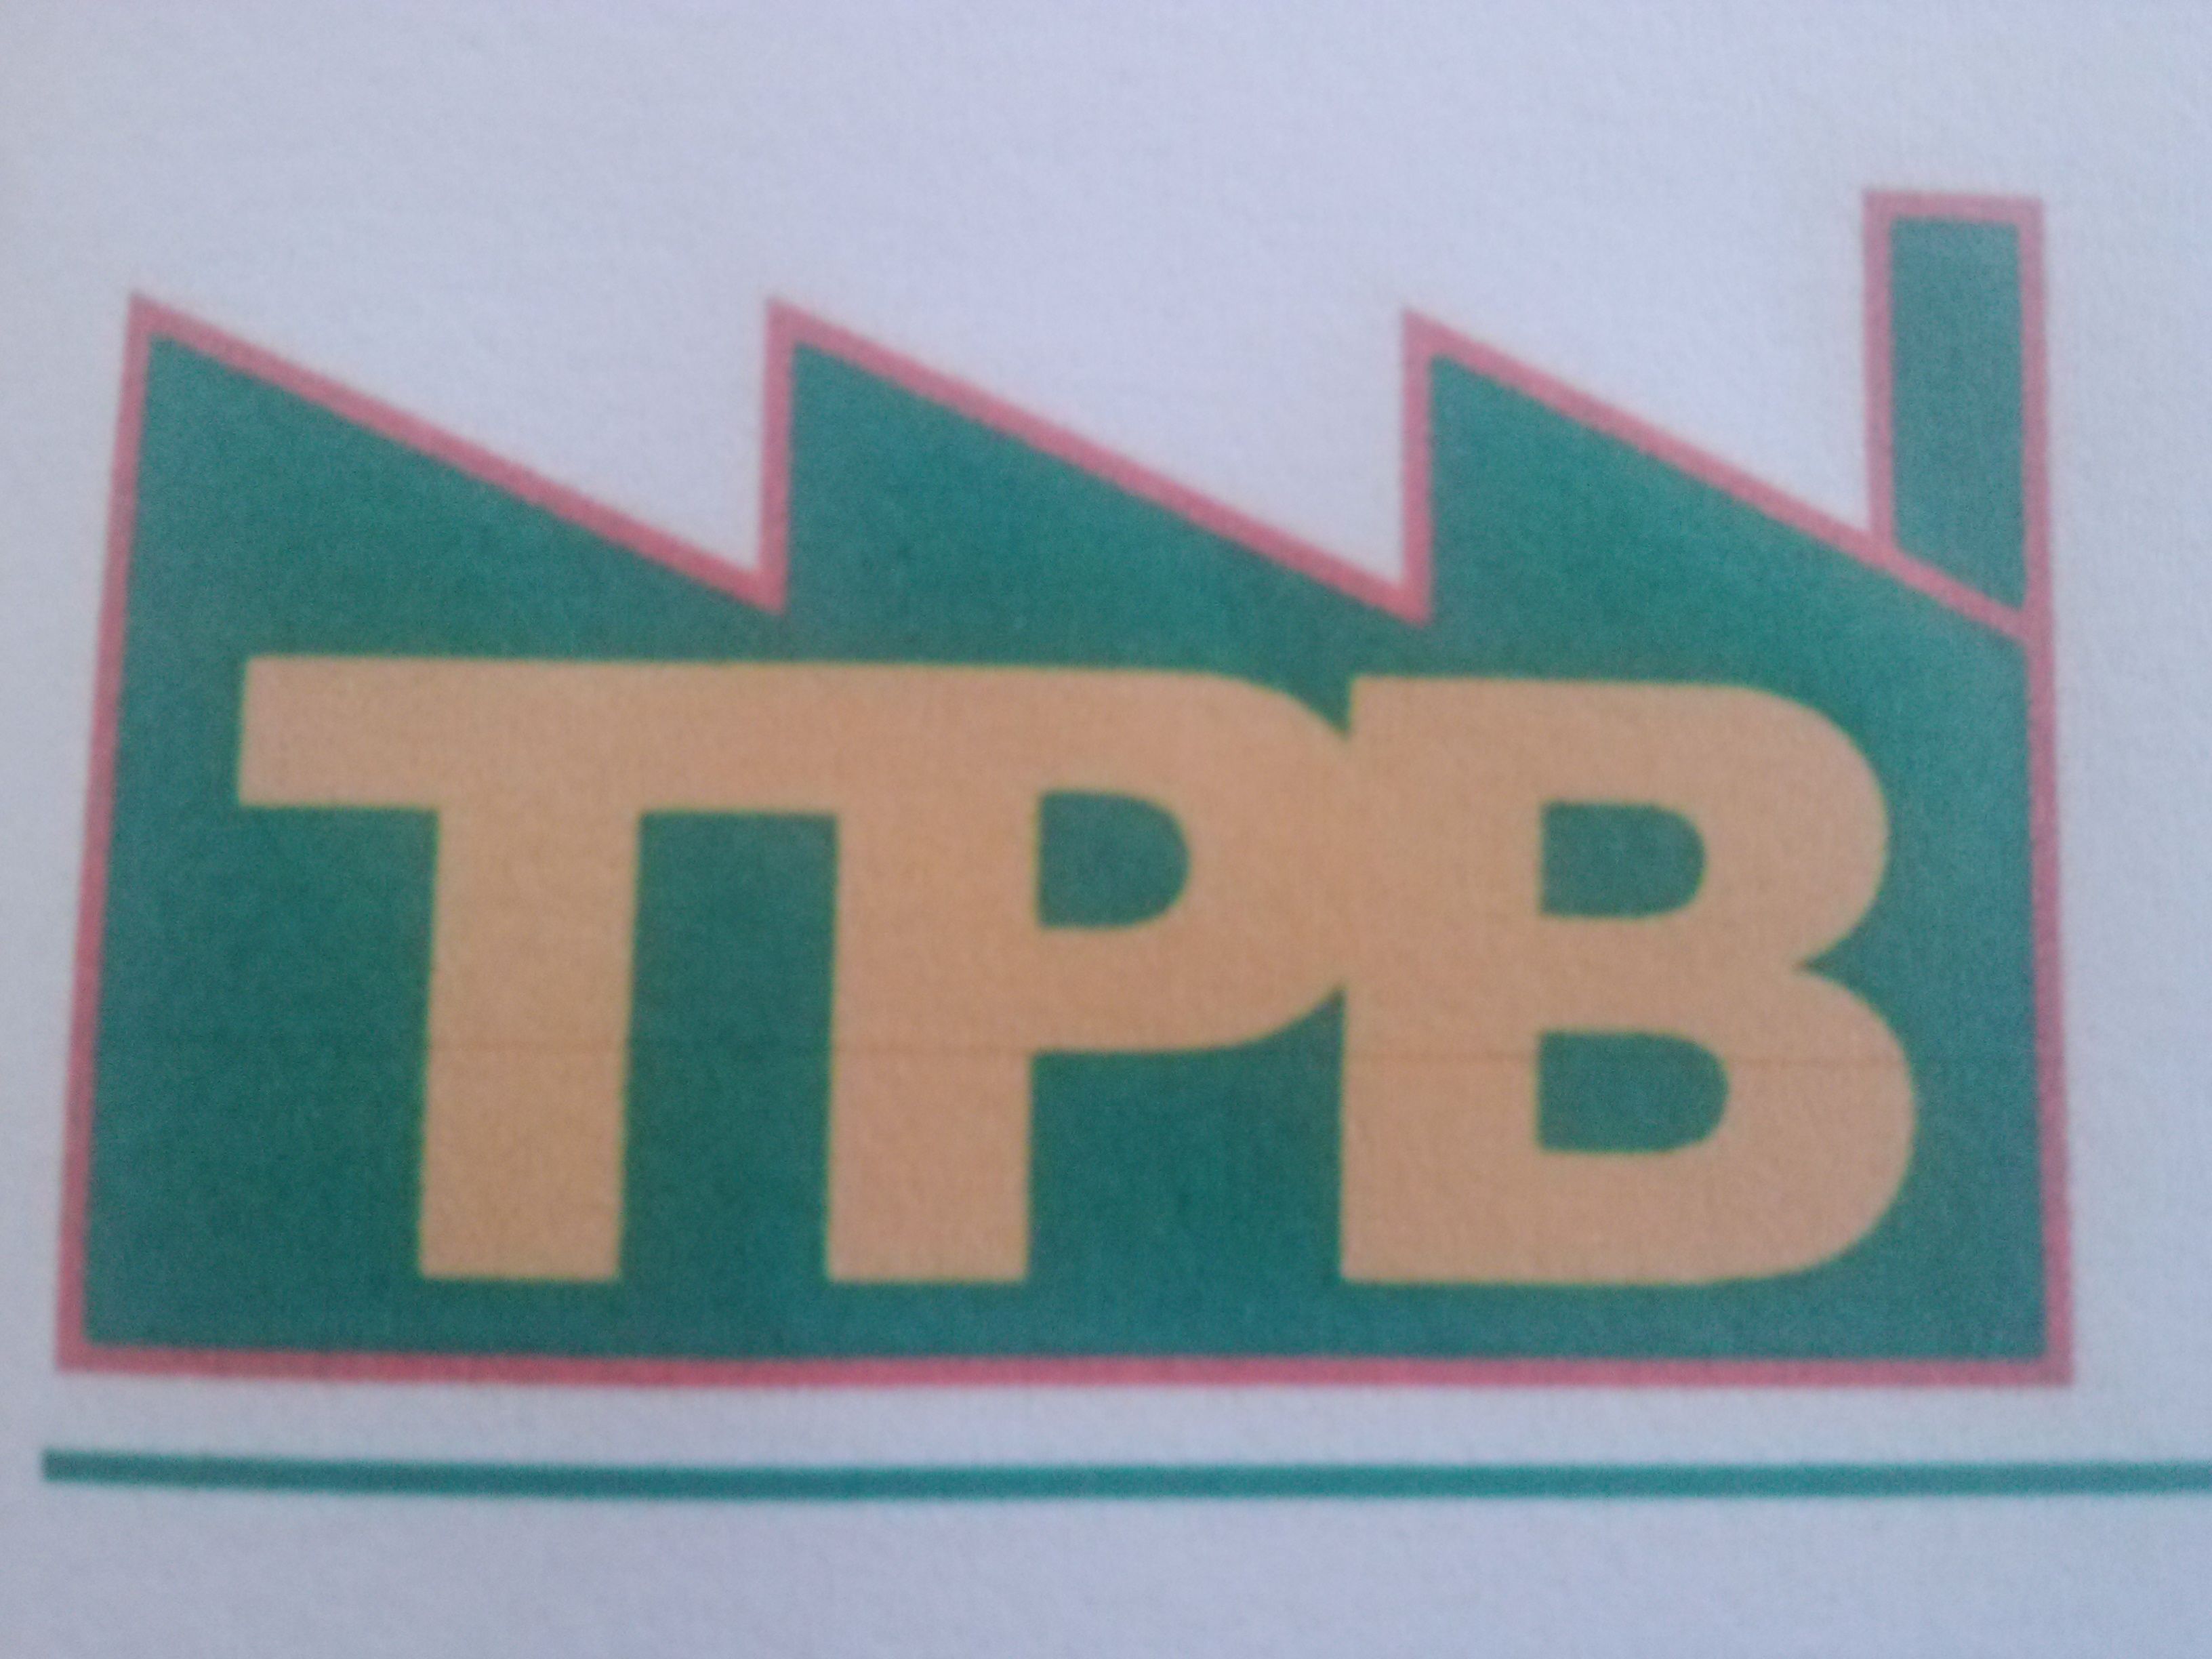 TPB-TV DEVELOPMENT Co, LTD.